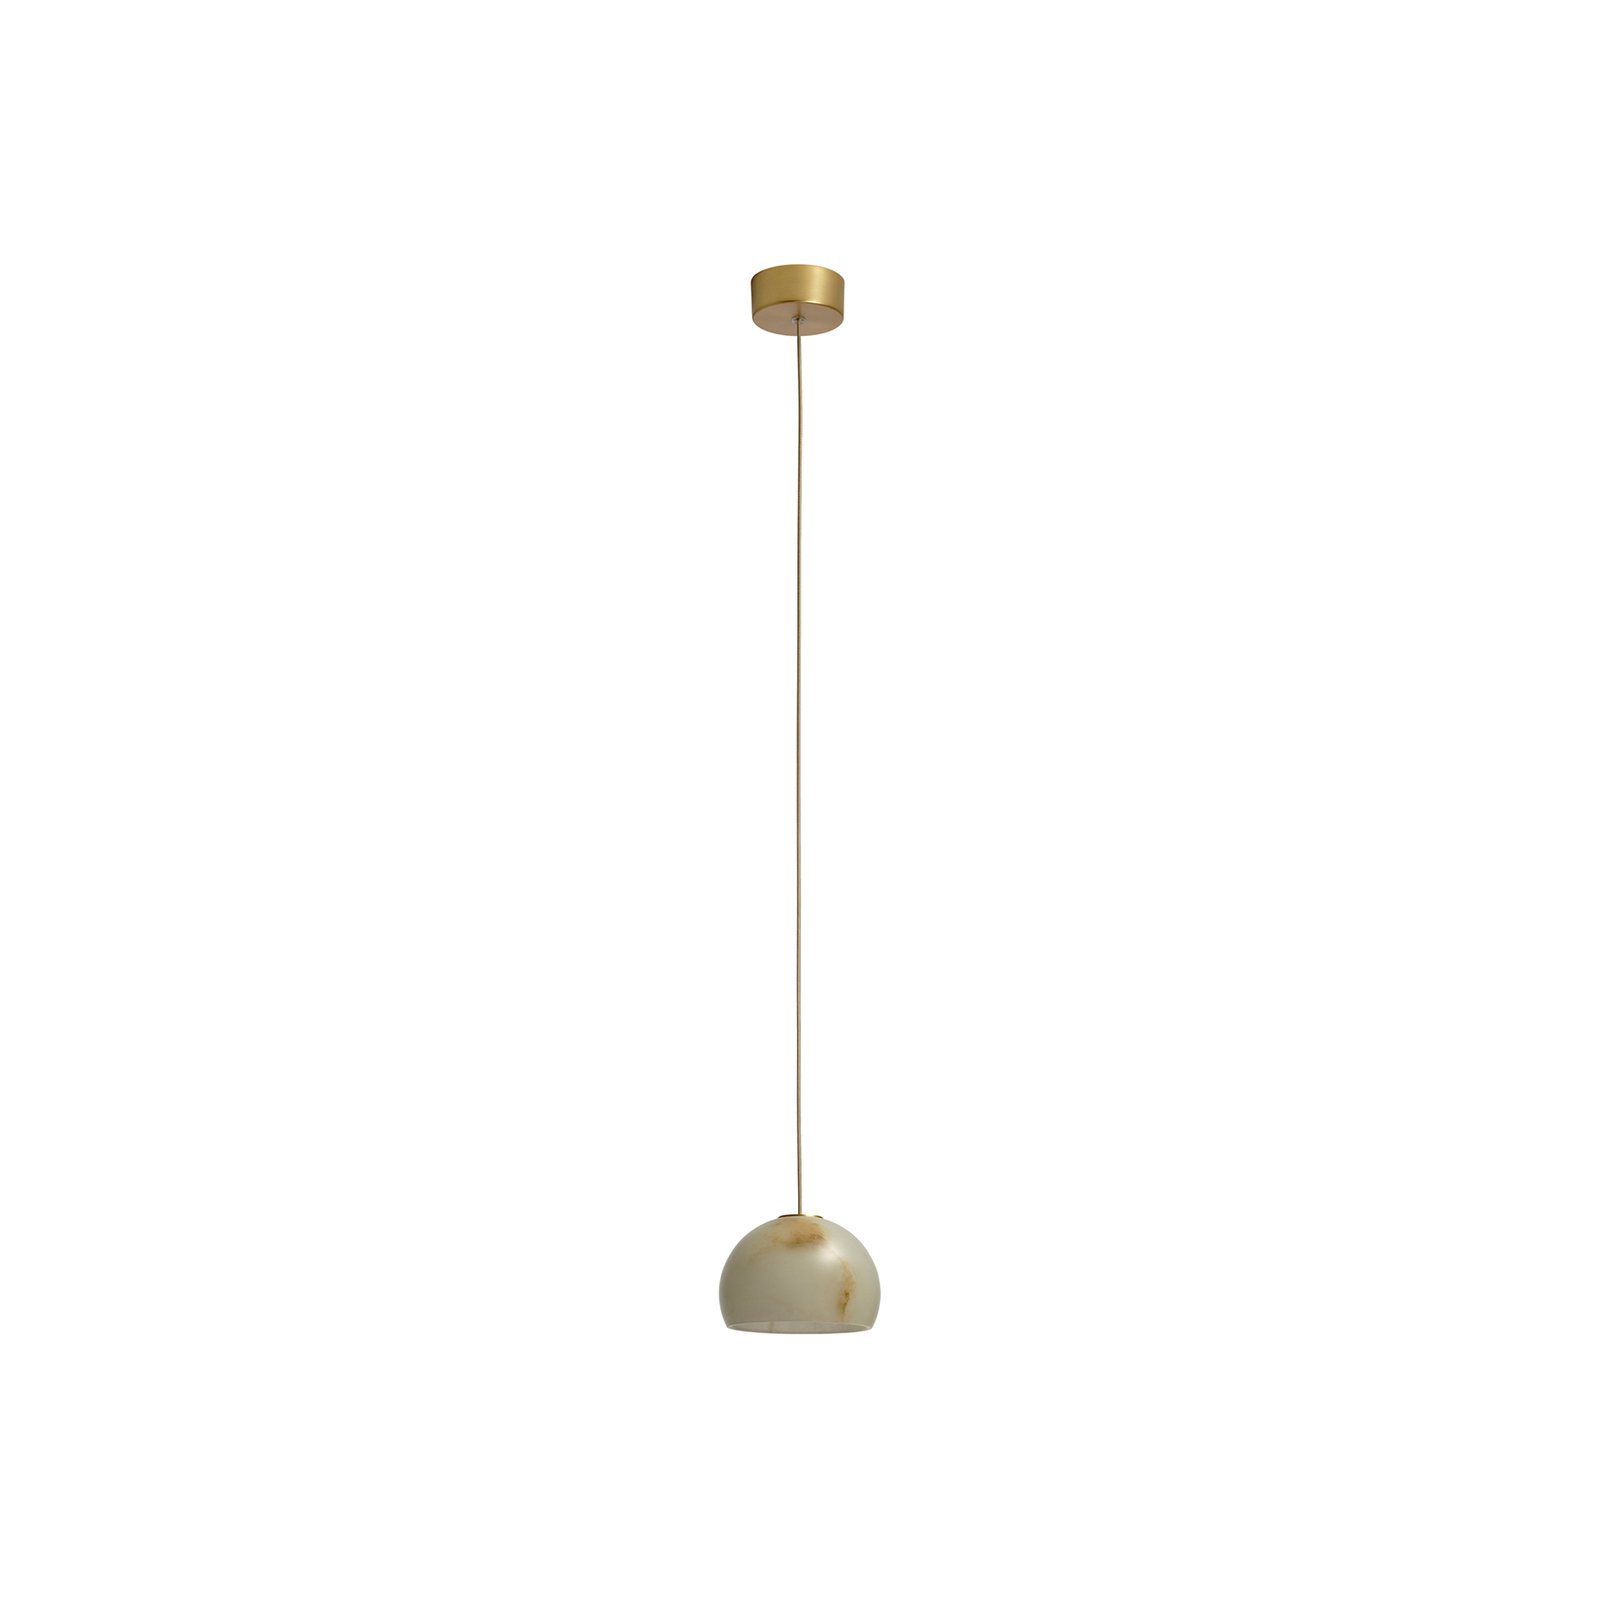 Neil LED hanglamp, Alabast, goud, Ø 15cm